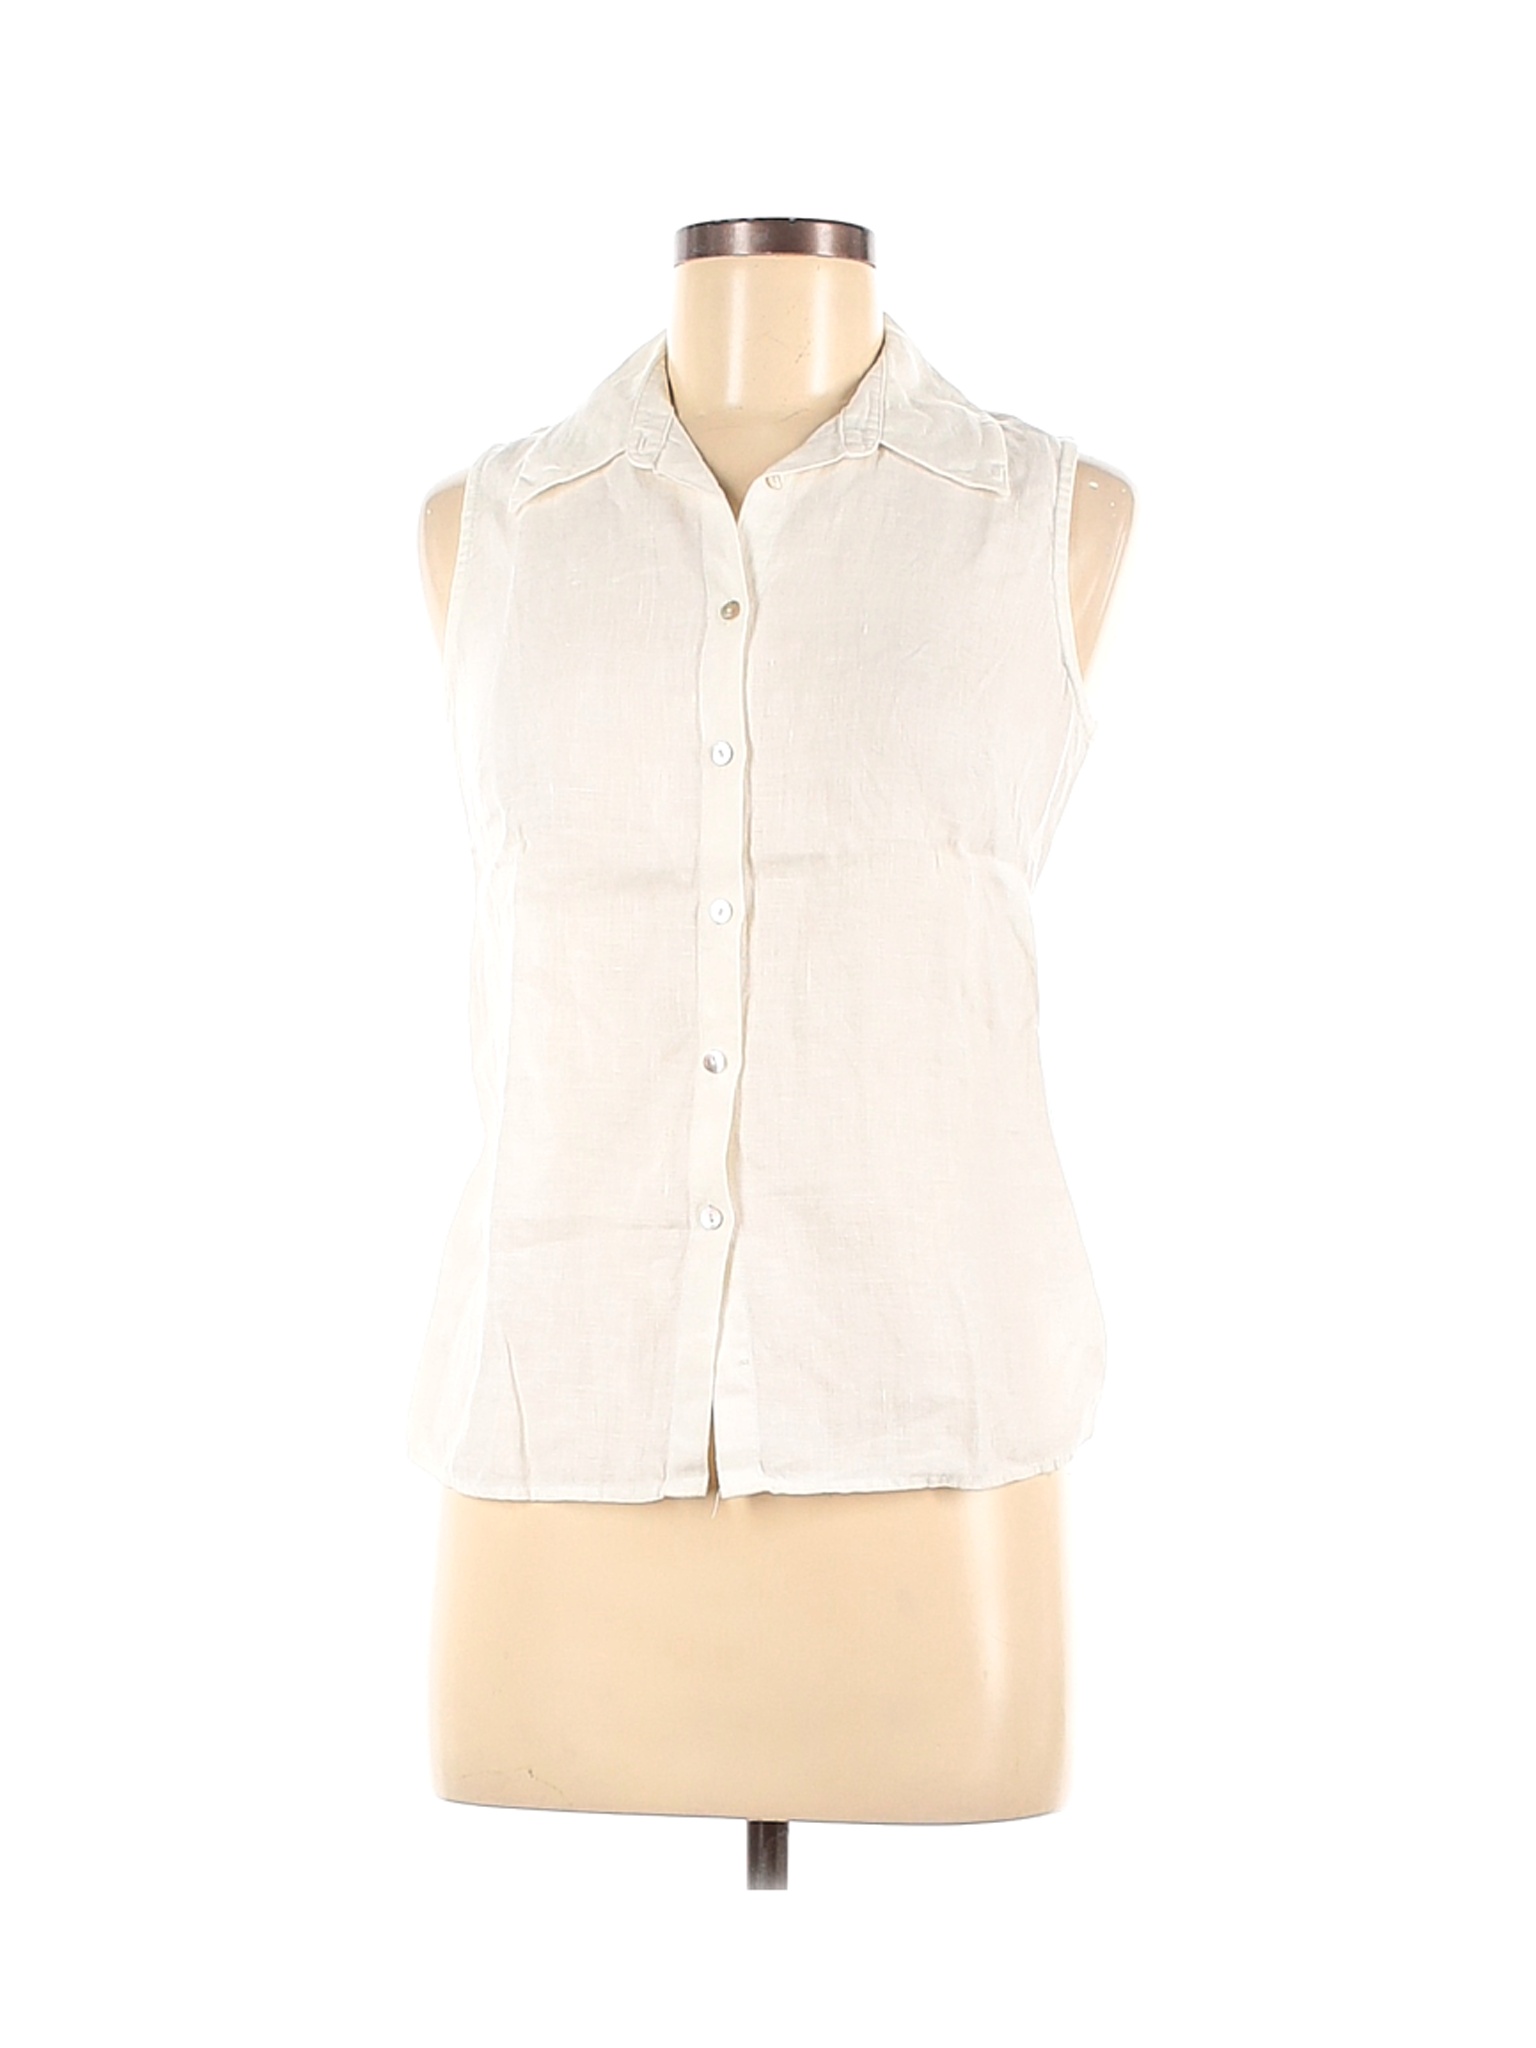 Unit Women Ivory Sleeveless Button-Down Shirt 38 eur | eBay